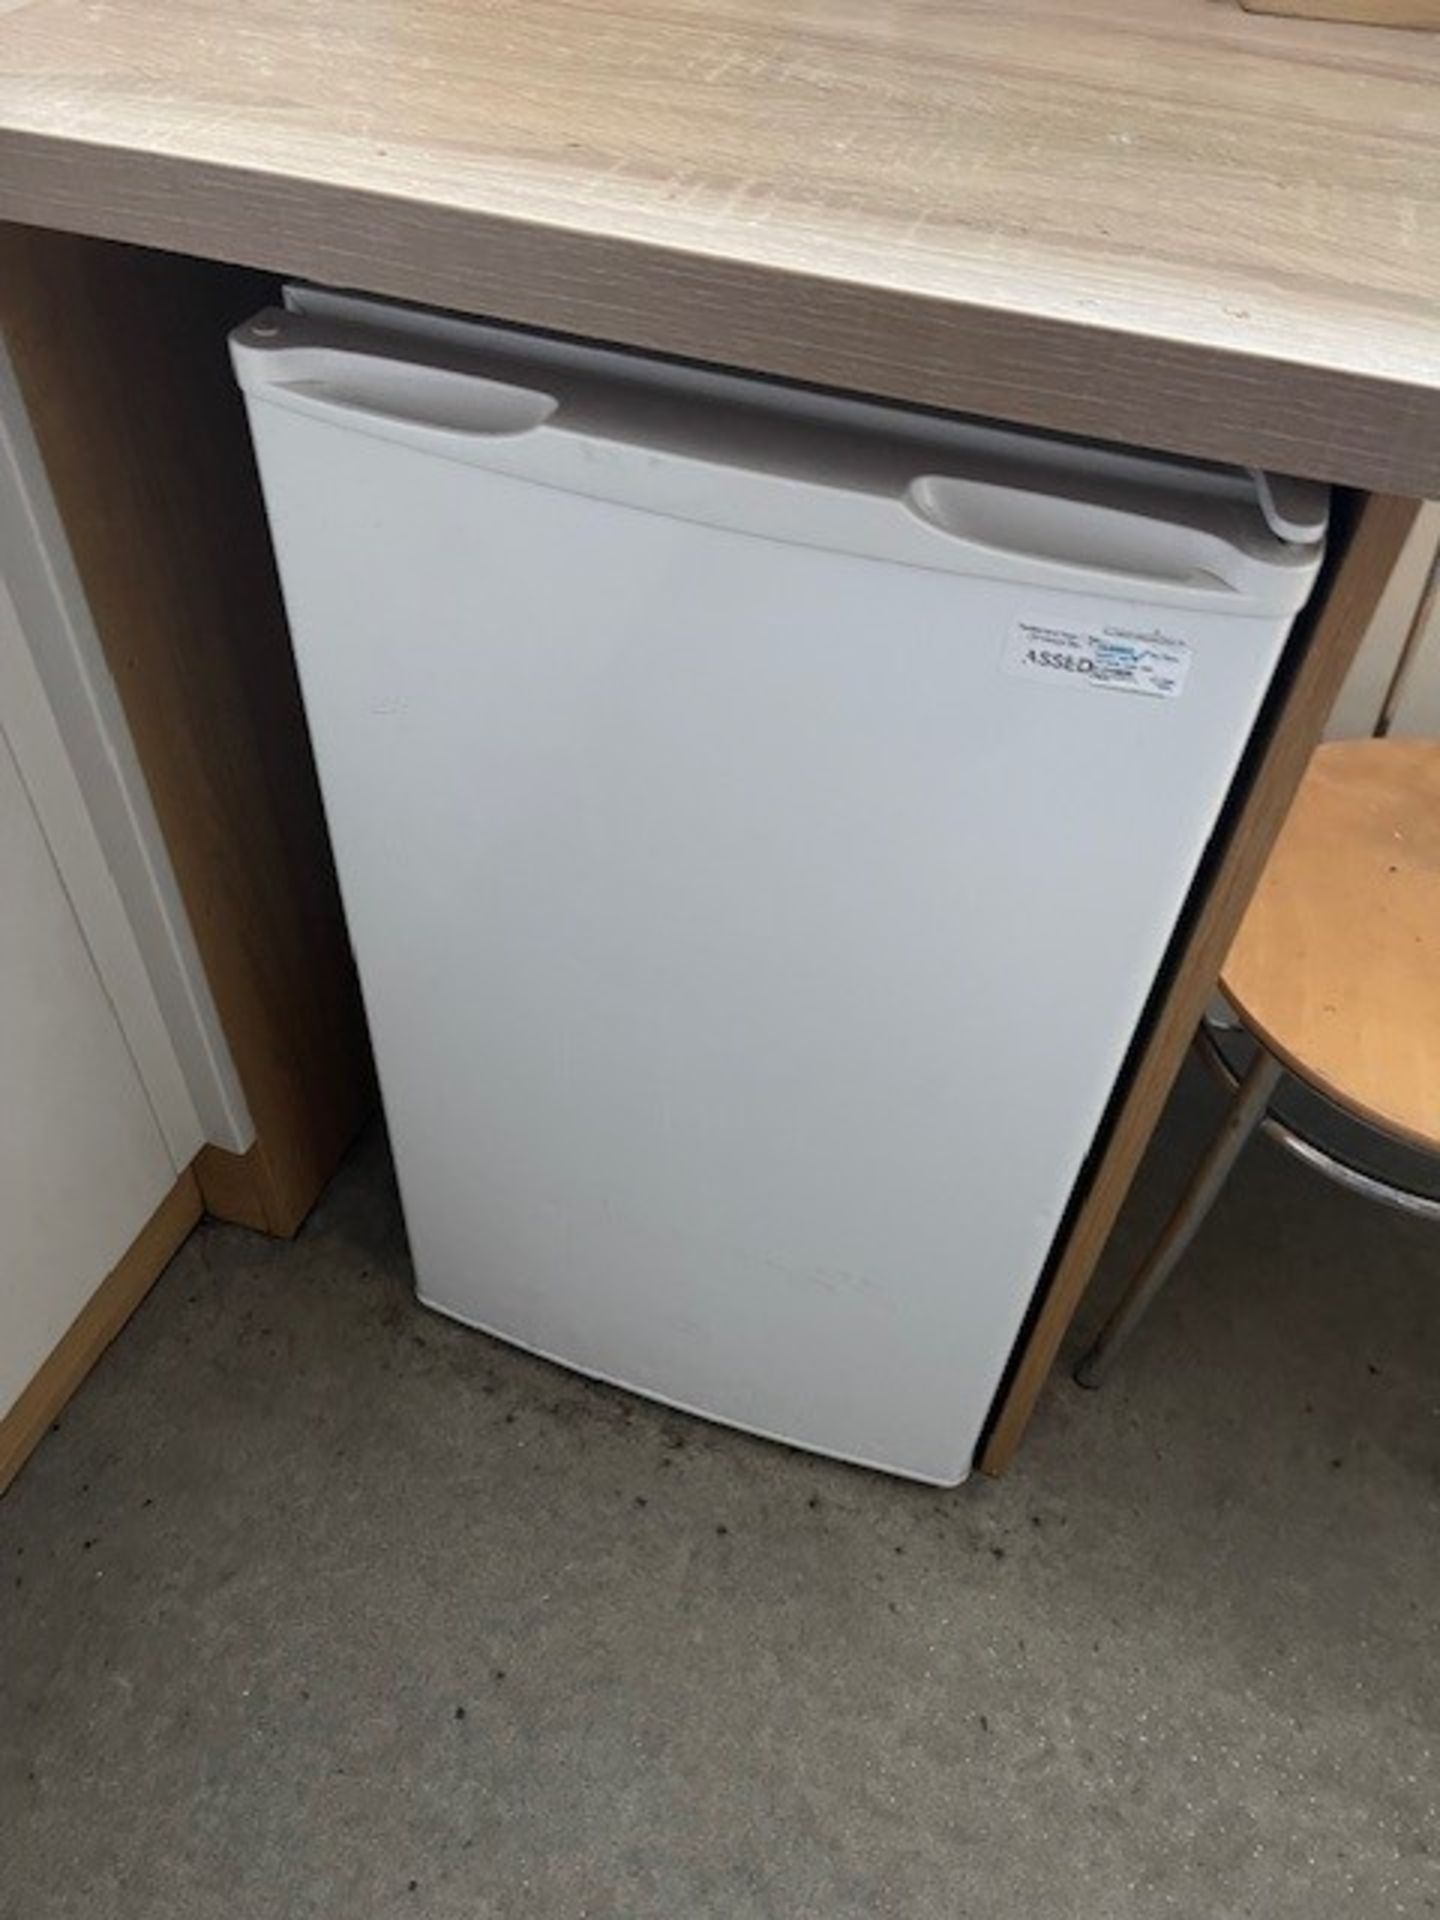 Russell Hobbs & Daewoo Two microwaves and 1 unbadged fridge - Image 2 of 4